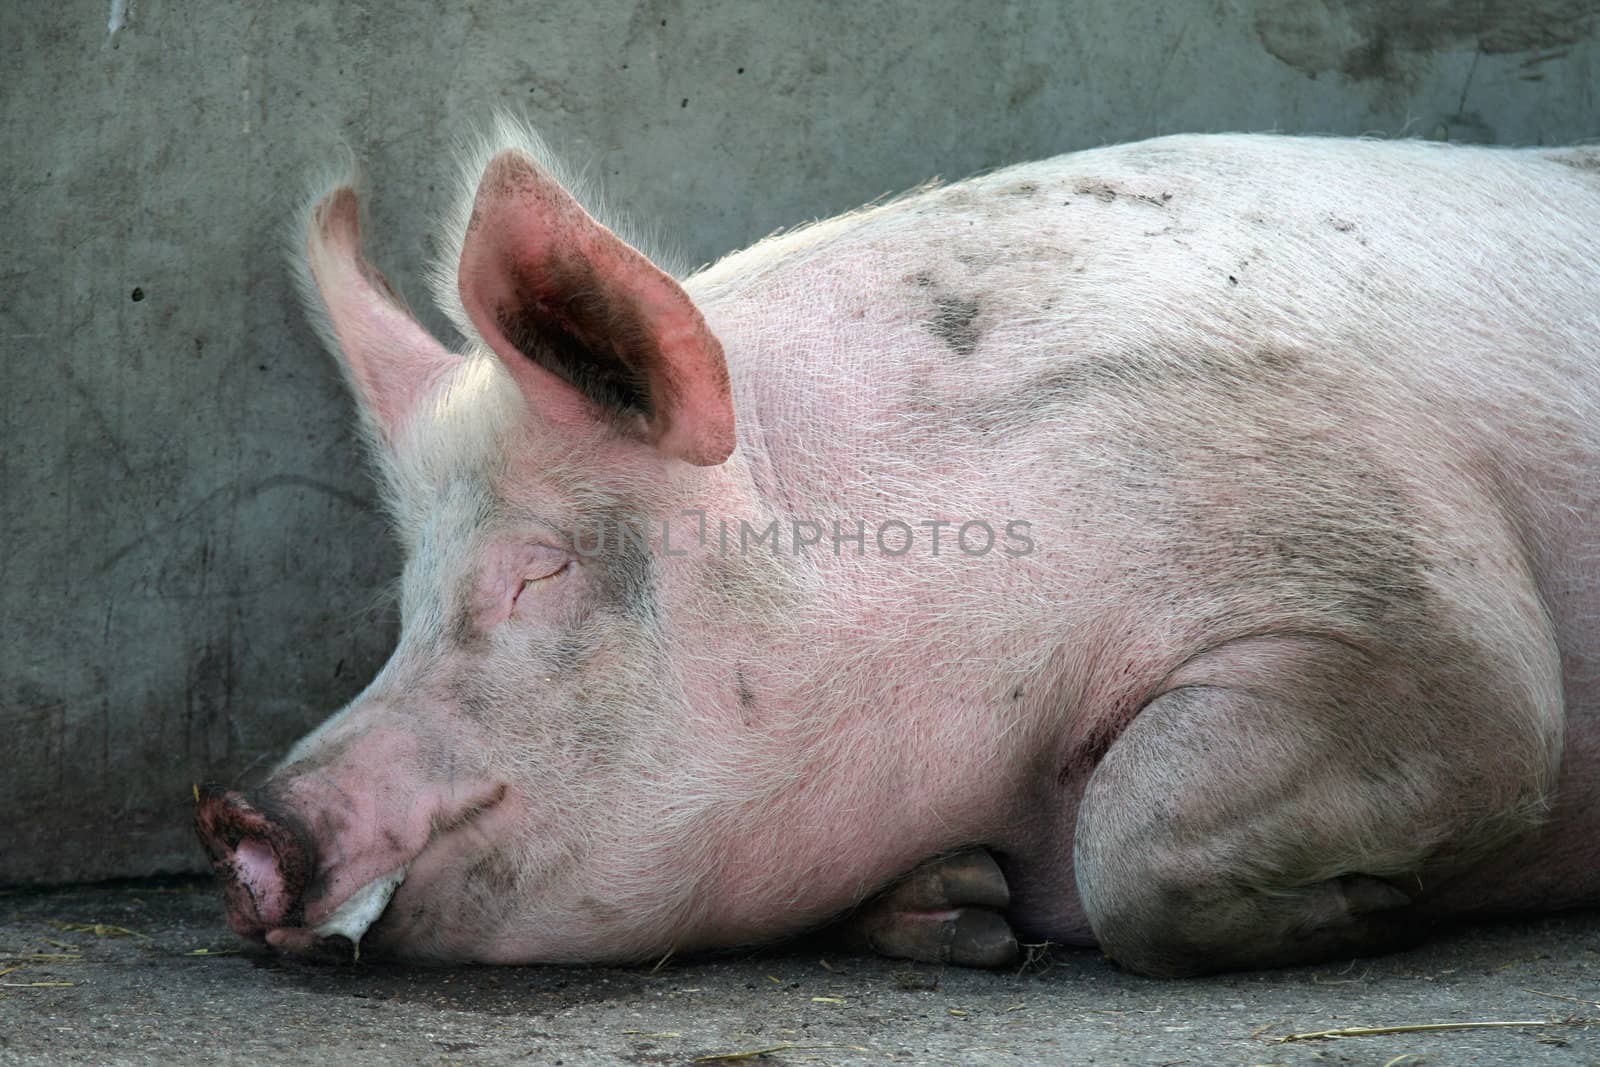 Sleeping Pig by gautier